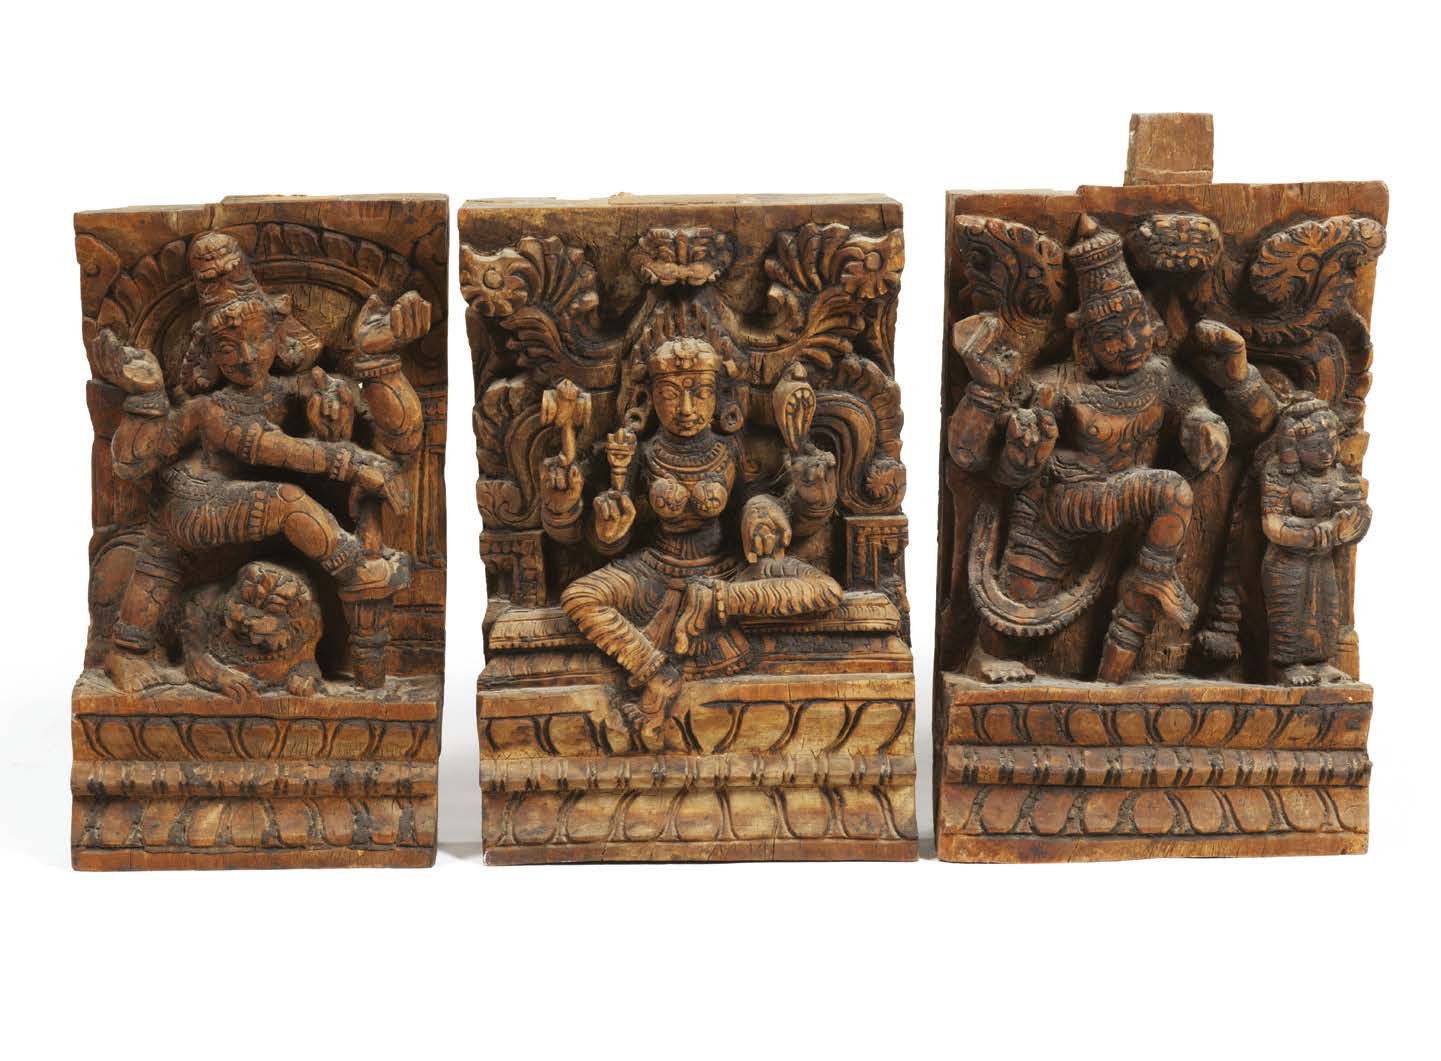 Null 三种雕刻的木头。
雕刻的木头，黑色的光泽。
南印度，可能是泰米尔纳德邦，19世纪。
高_35厘米，宽_23.5厘米
出处：伦敦佳士得，2008年